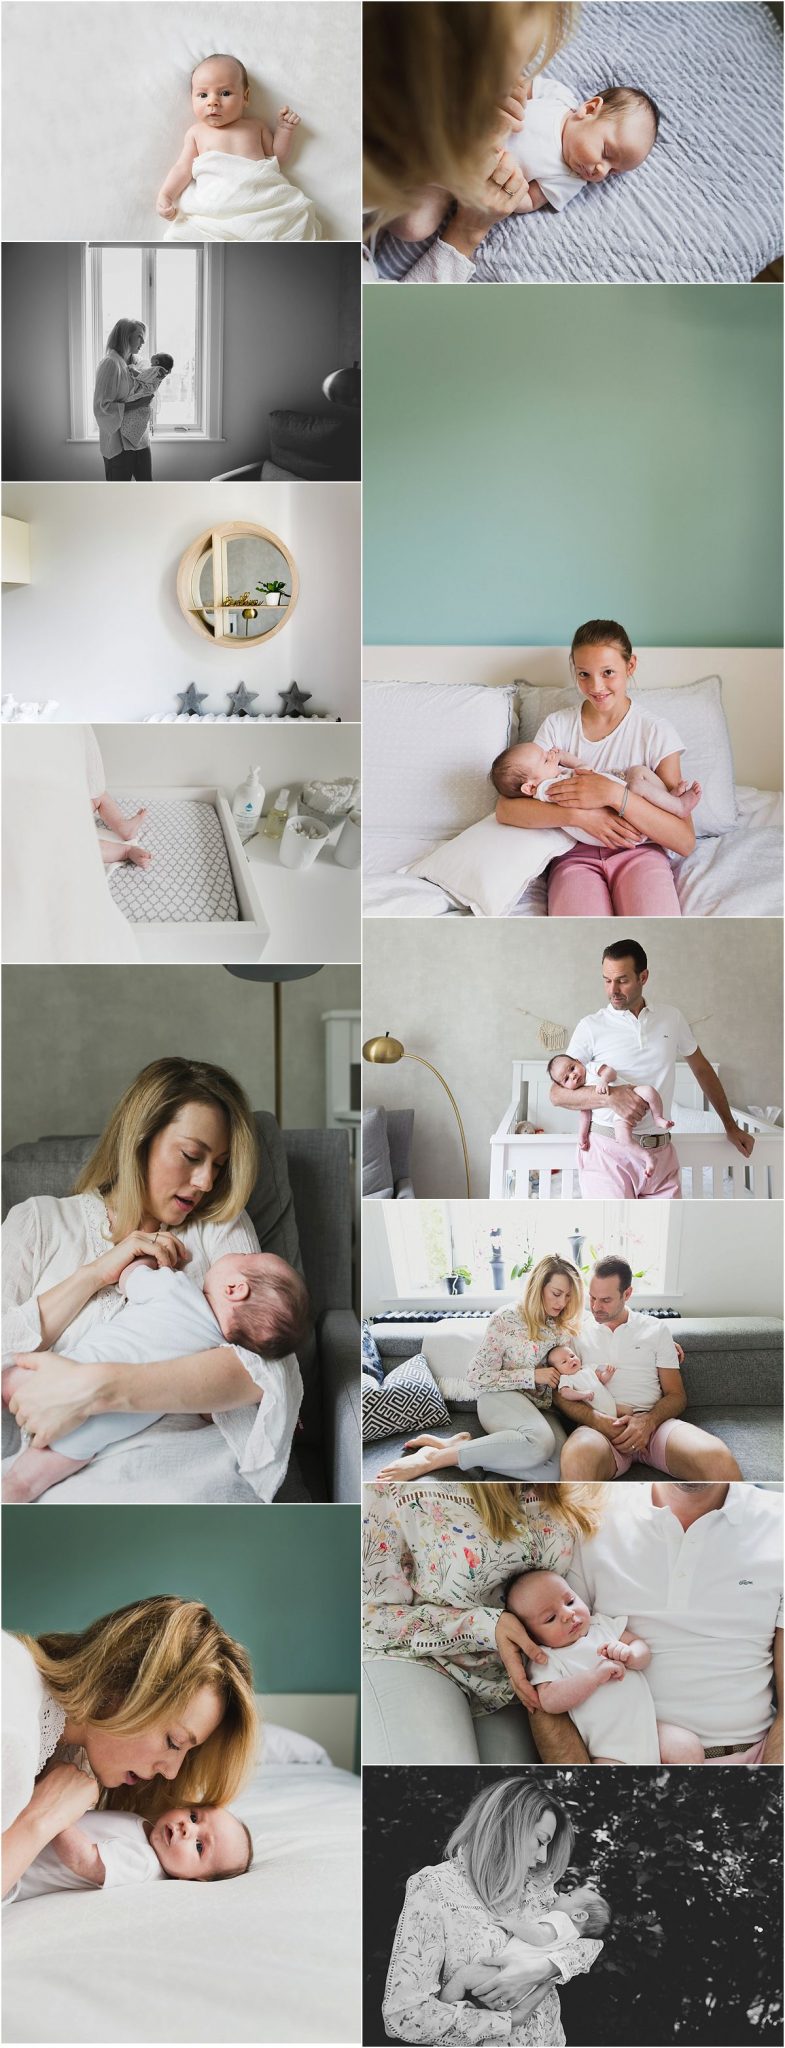 NDG Newborn Photographer | Michelle Little Photography, Montreal, Canada